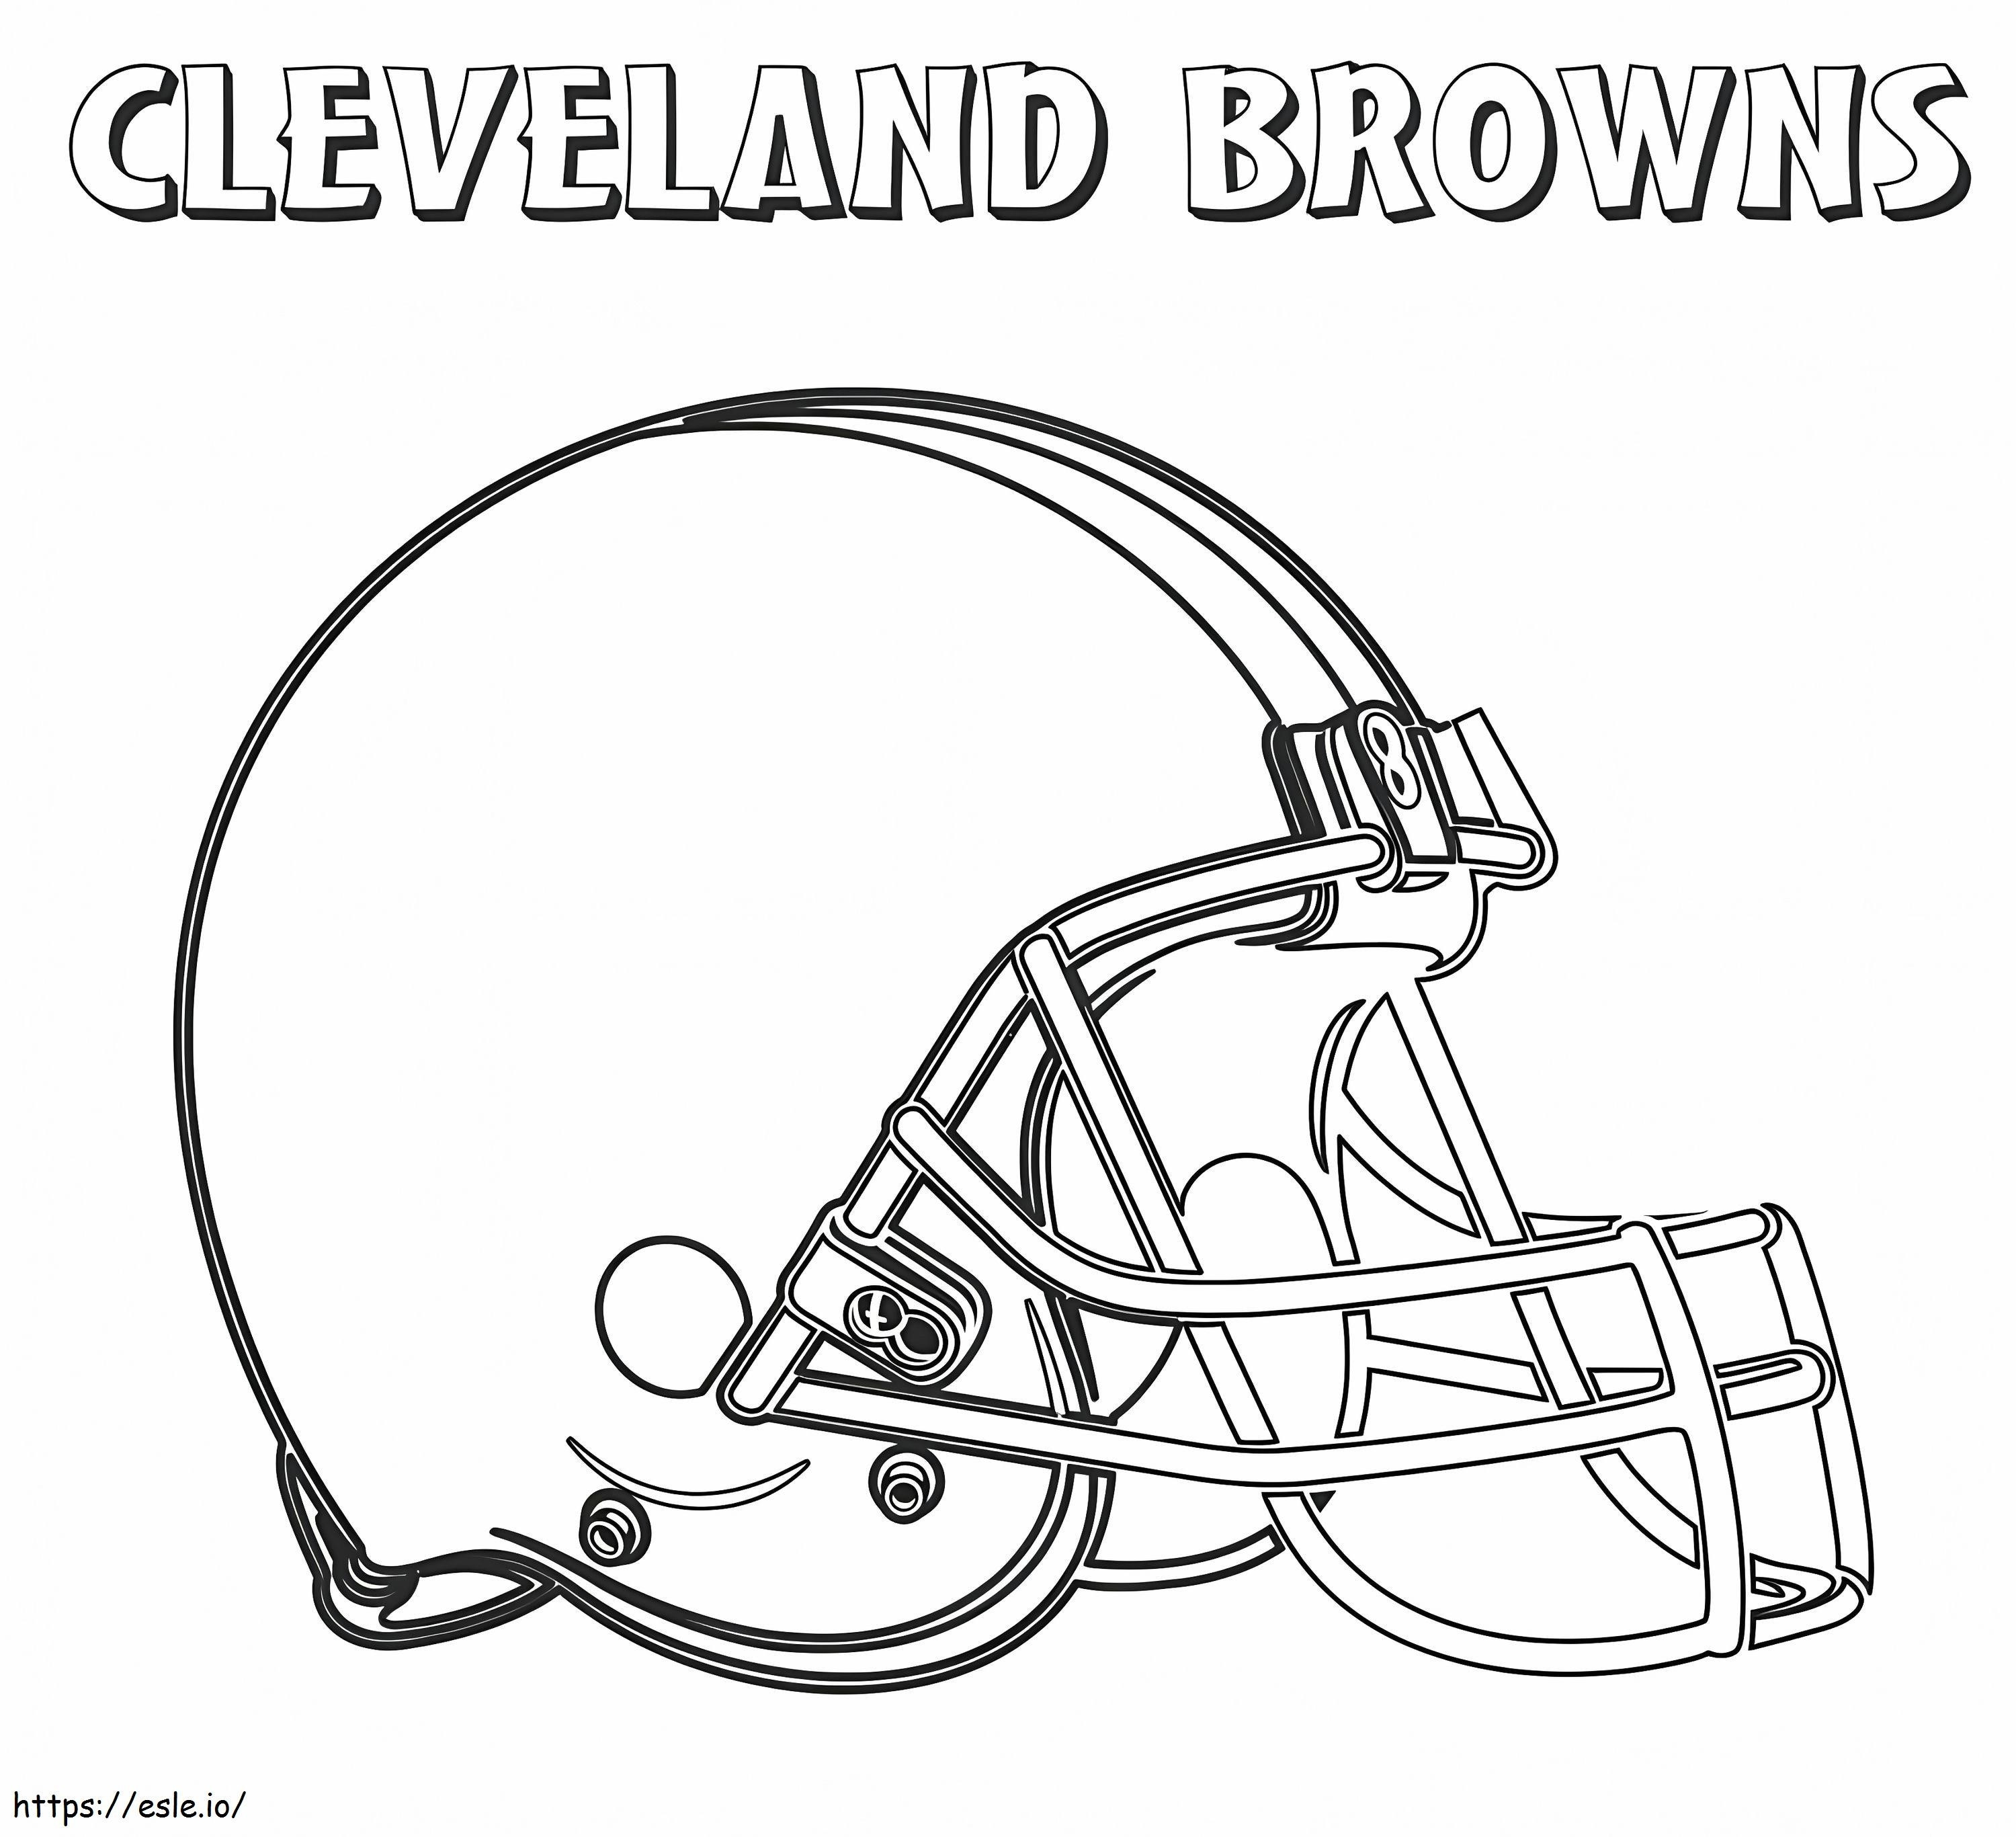 Cleveland Browns 1 kleurplaat kleurplaat